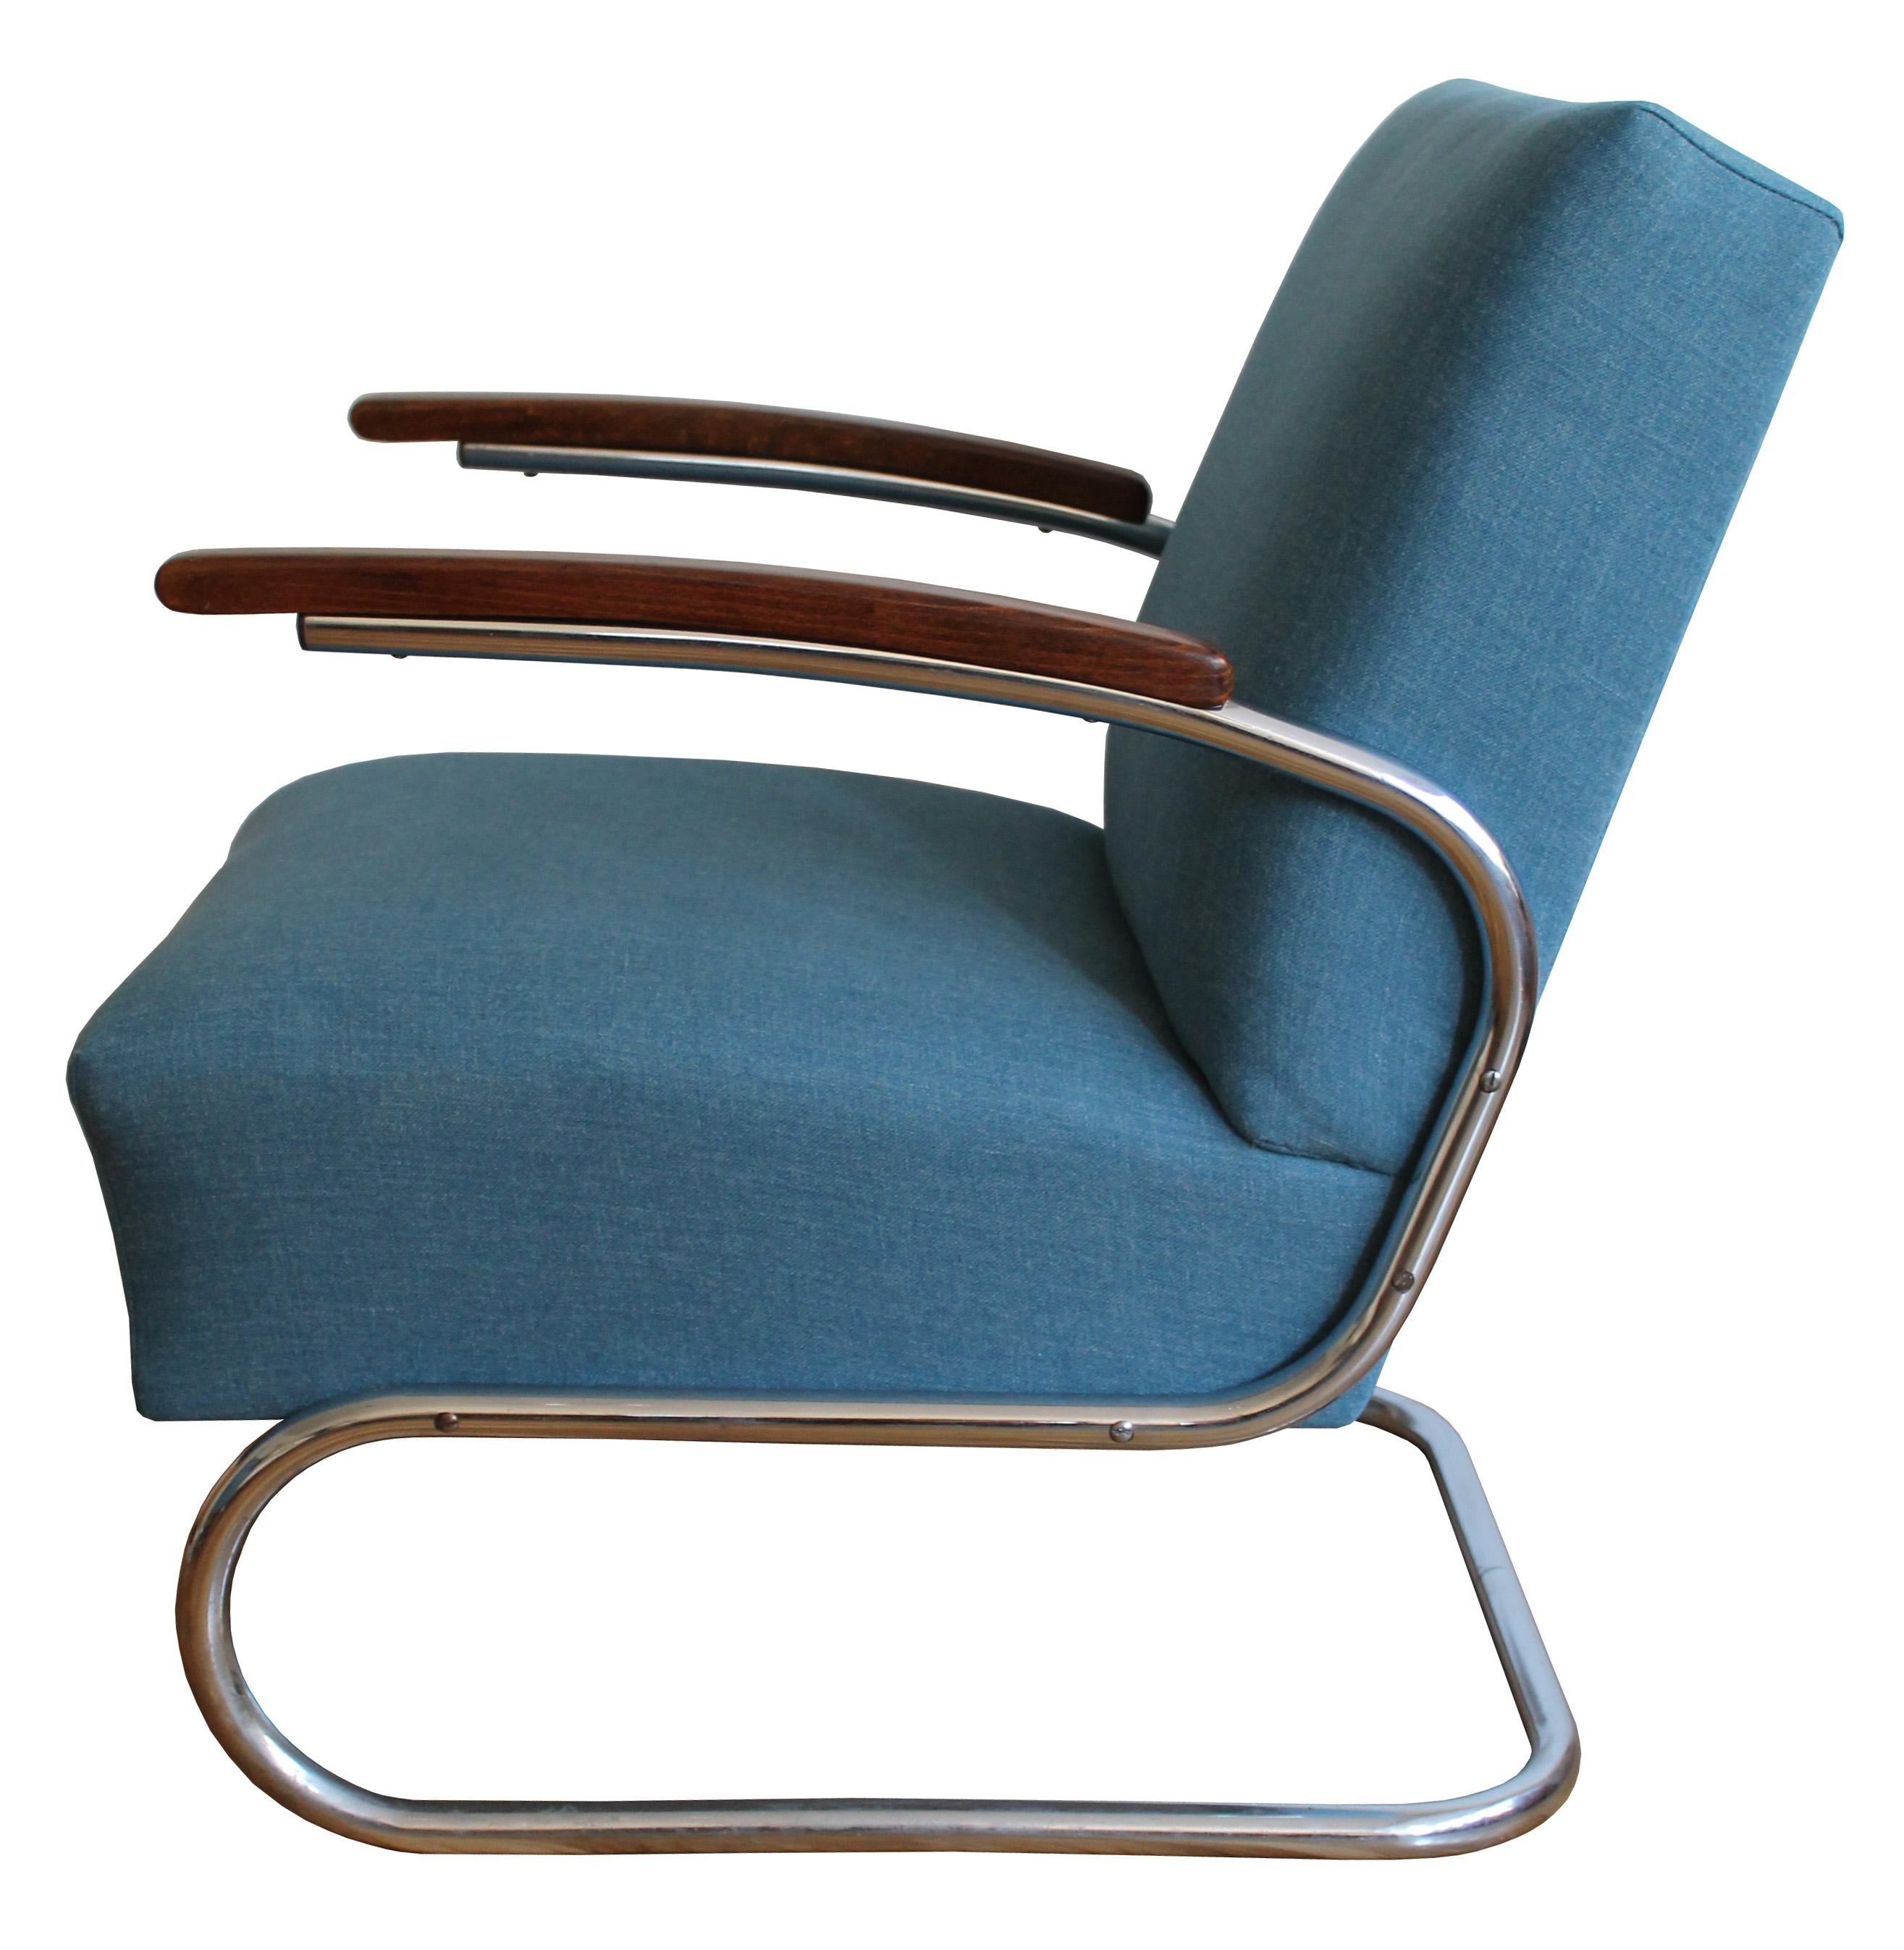 Bauhaus 1930's Modernist Lounge Chair by Walter Schneider and Paul Hahn